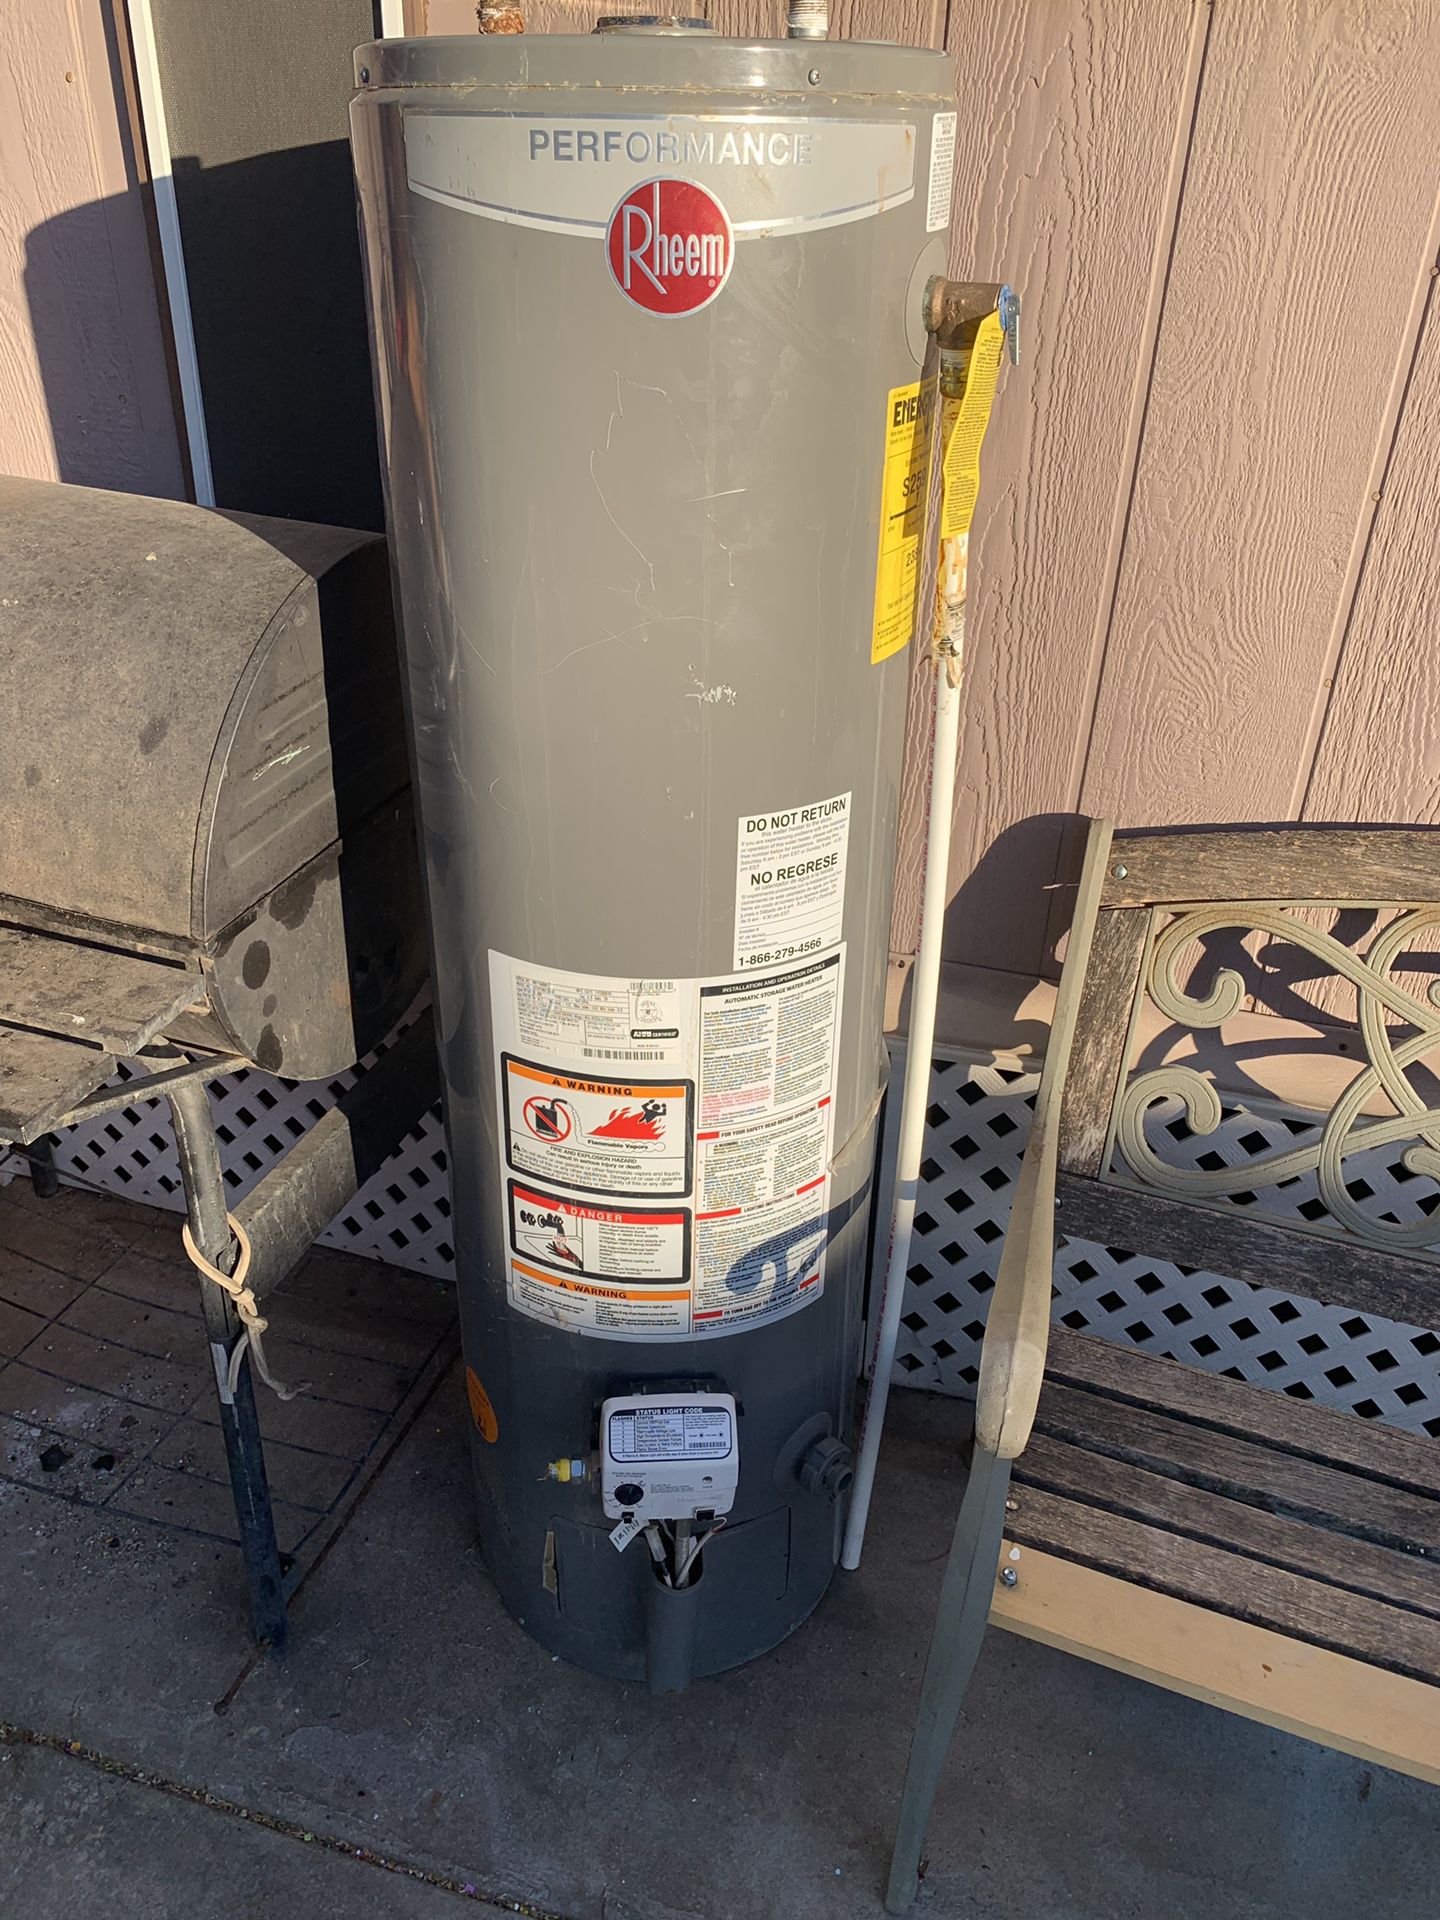 30 gallon gas water heater